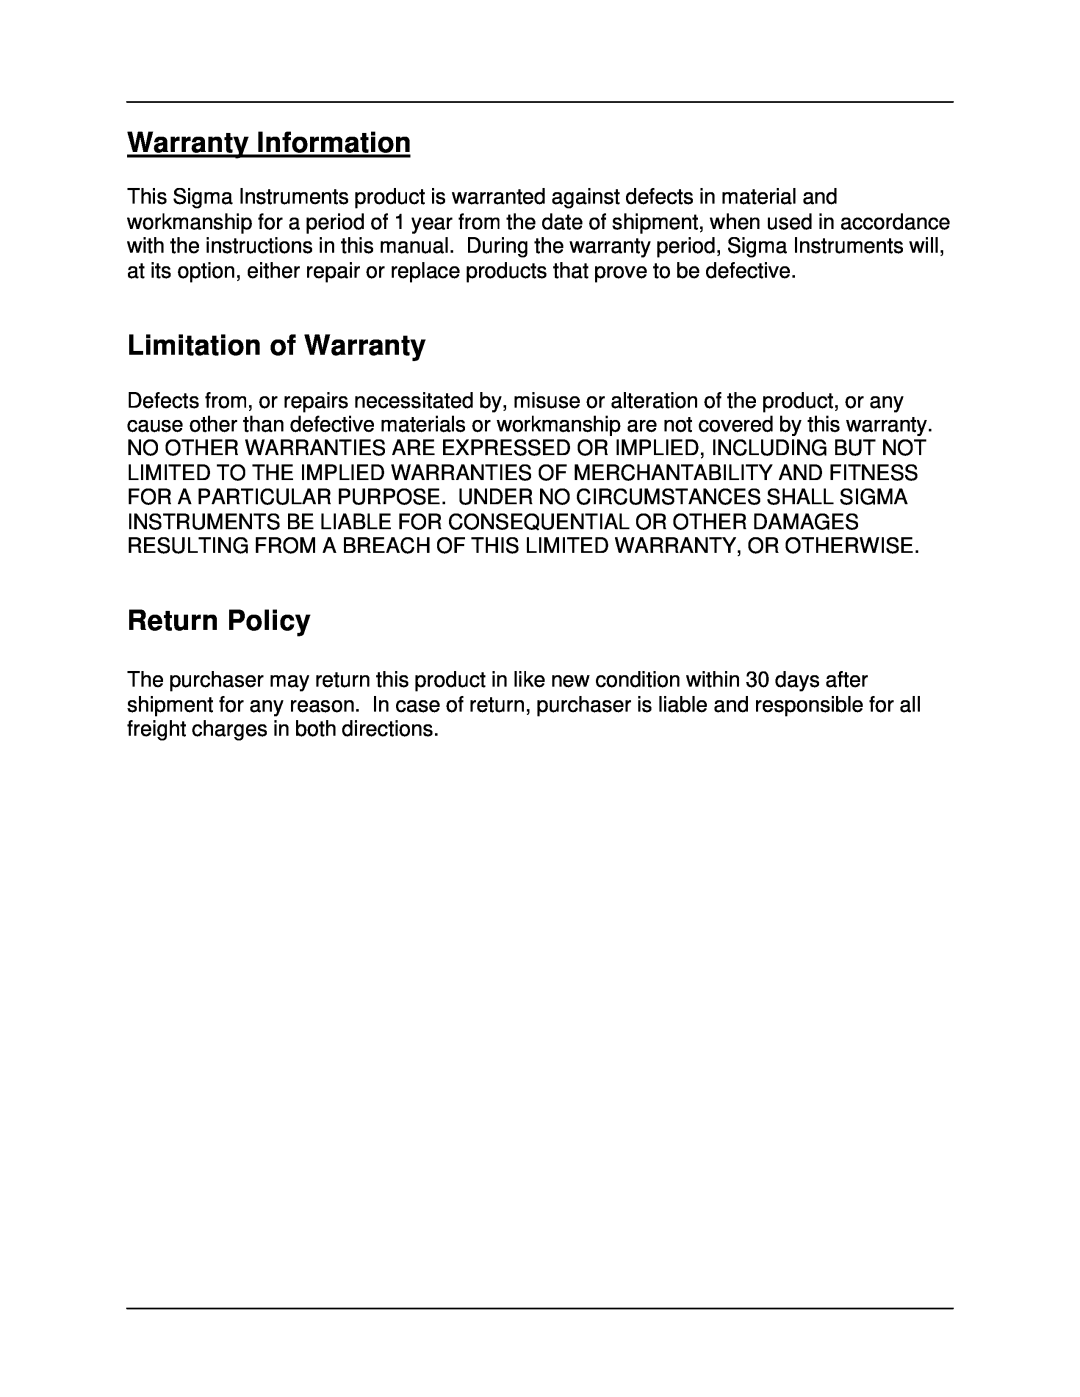 Sigma SQM-160 manual Warranty Information, Limitation of Warranty, Return Policy 